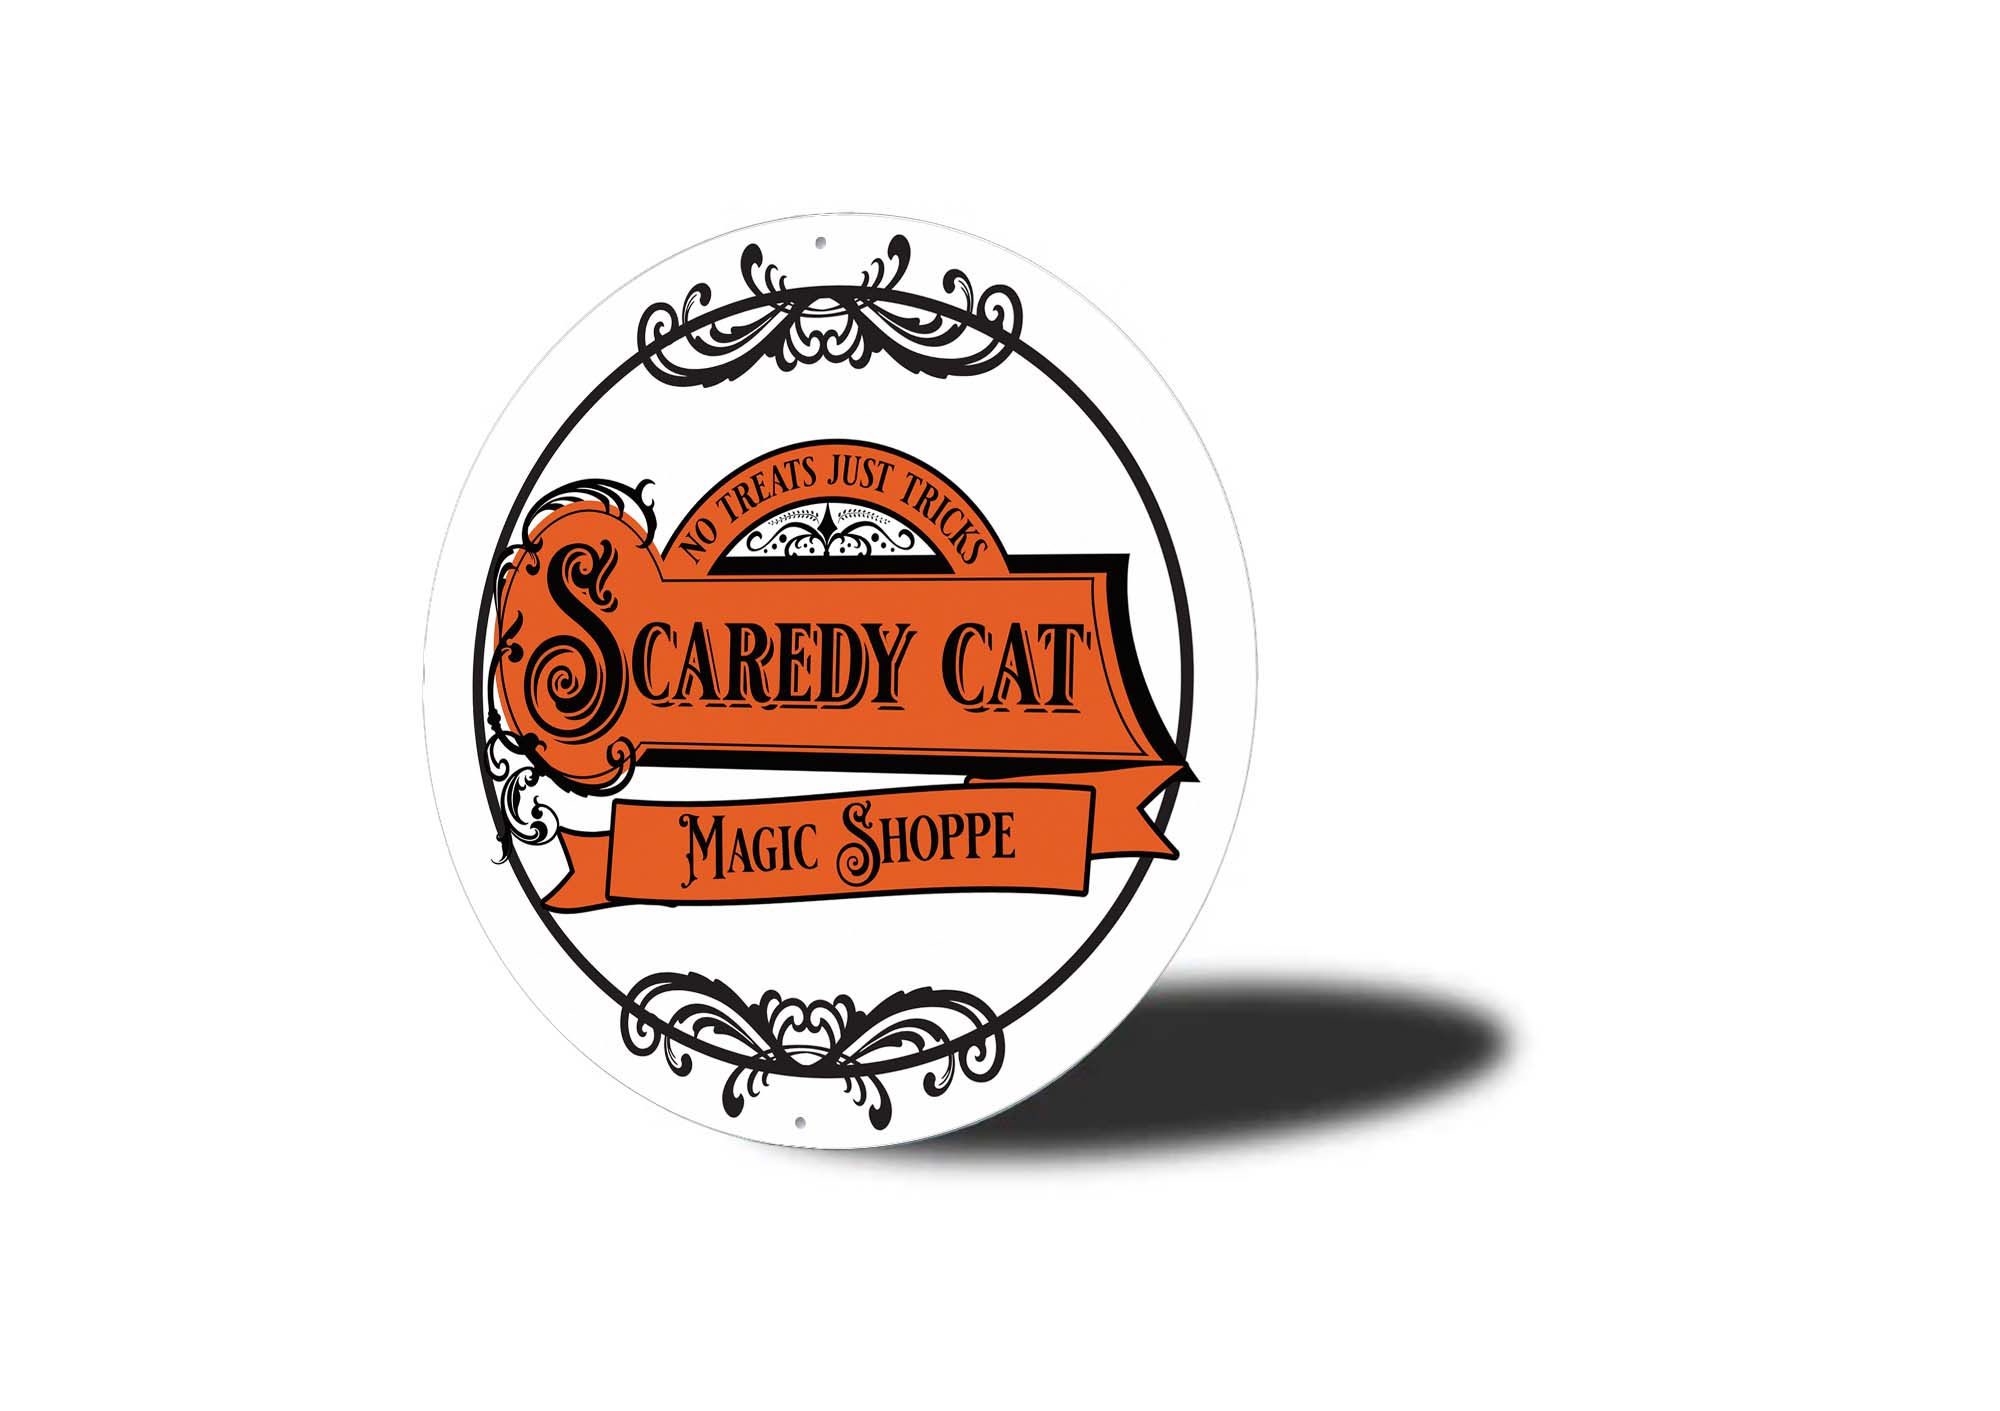 Scaredy Cat Magic Shoppe Halloween Sign